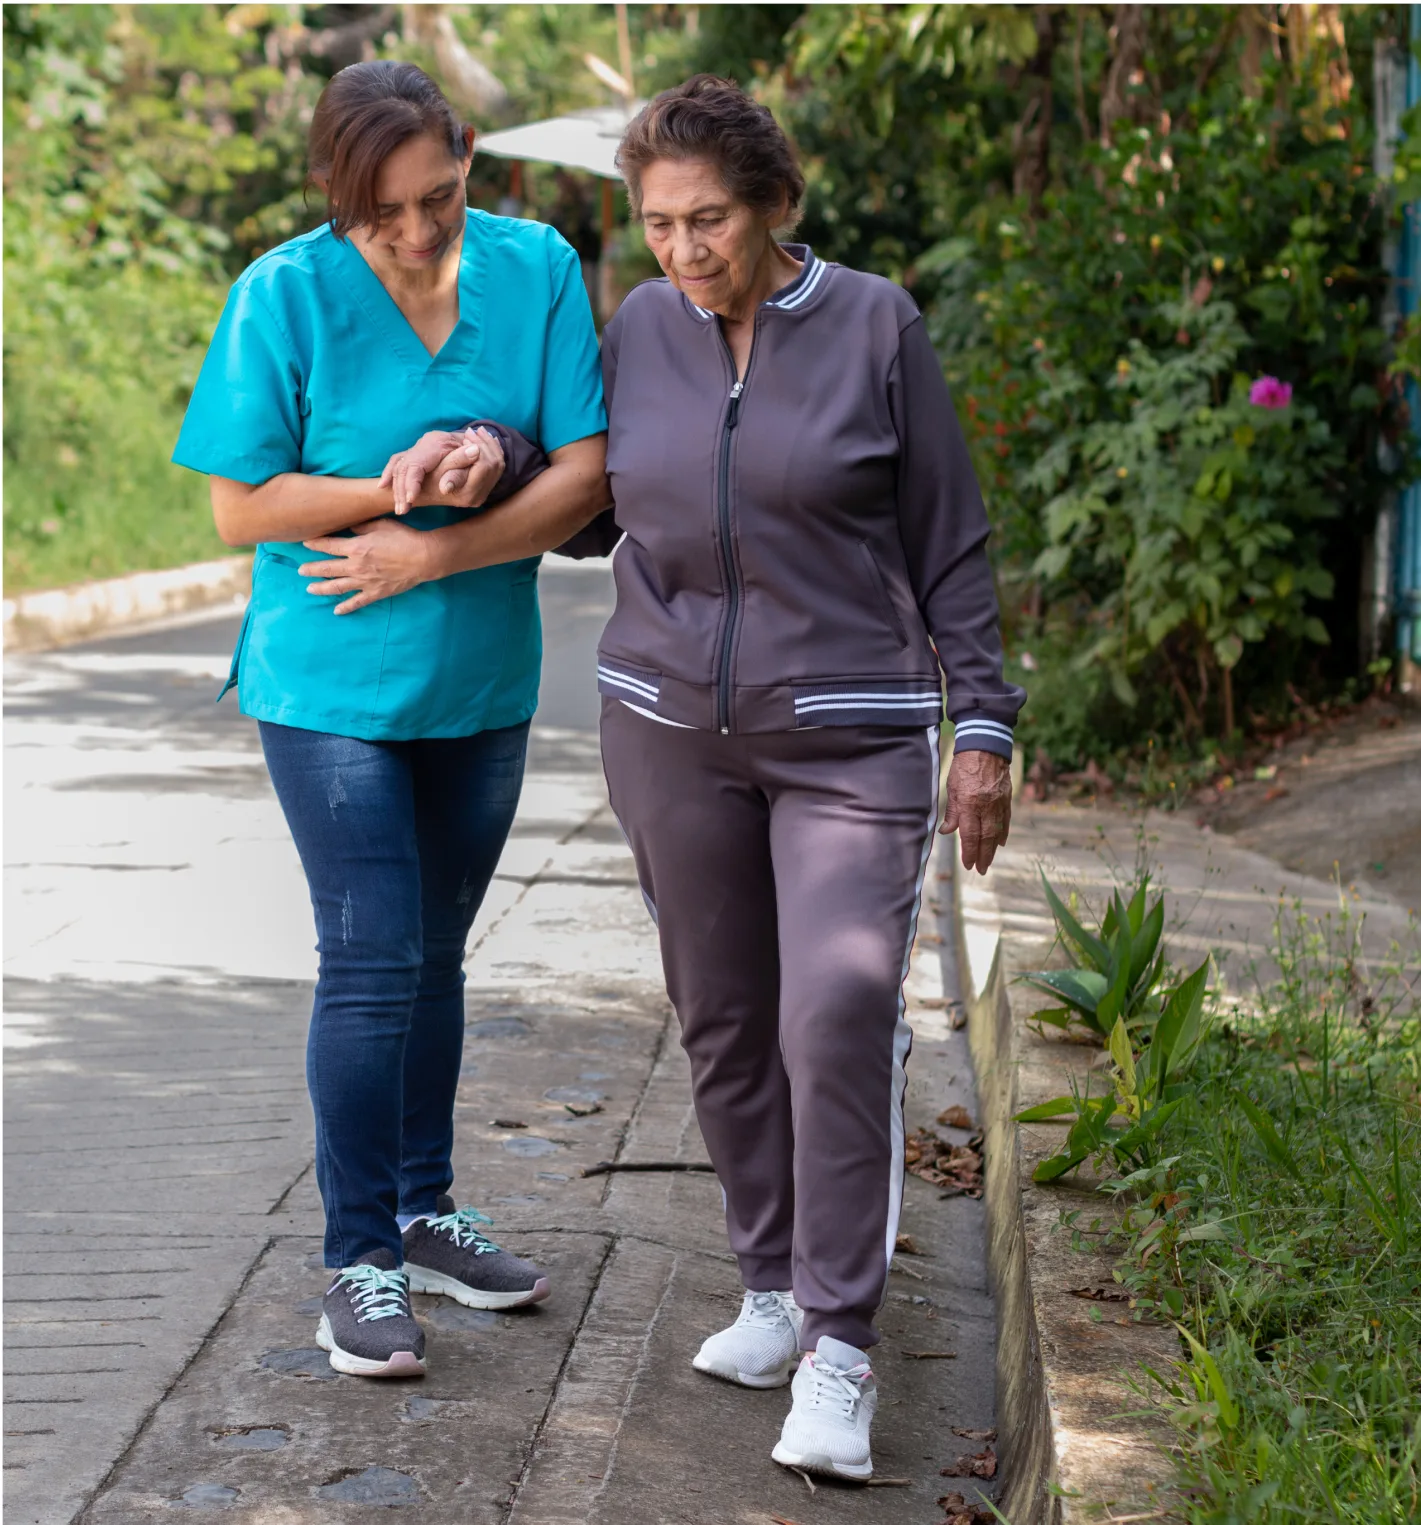 nurse-assisting-an-elderly-woman-with-walking-diff-2023-01-25-11-24-54-utc